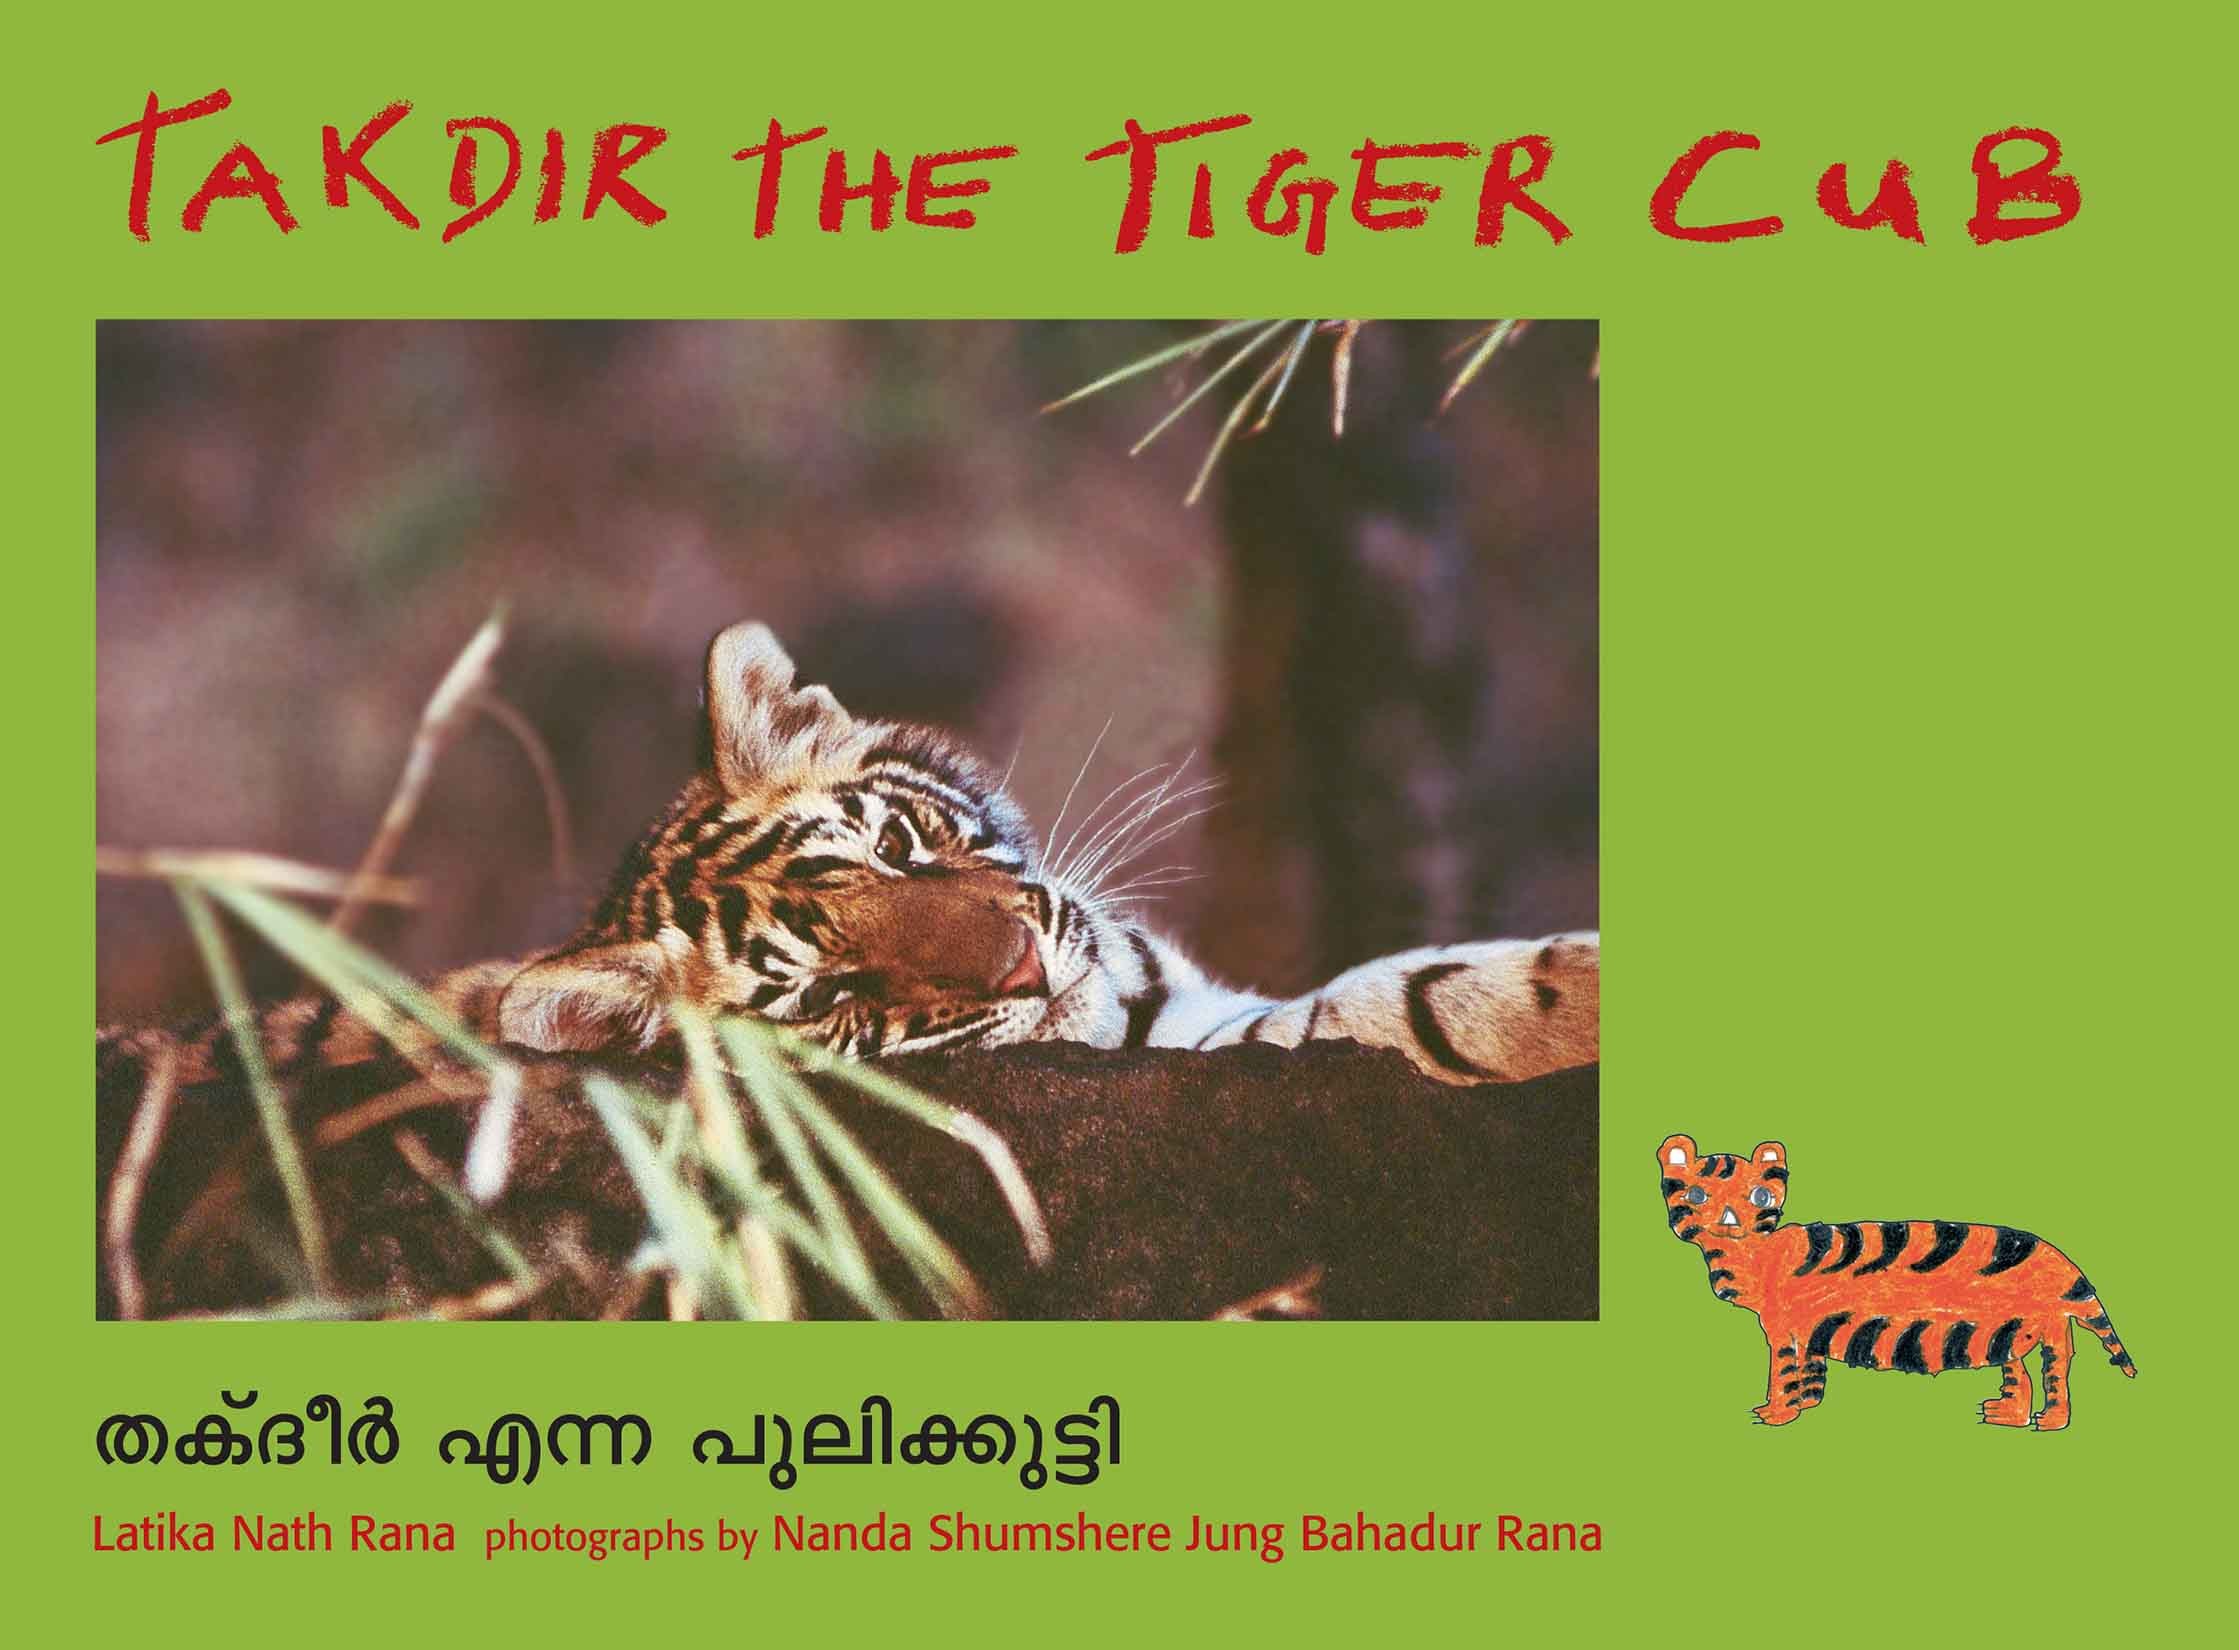 Takdir The Tiger Cub